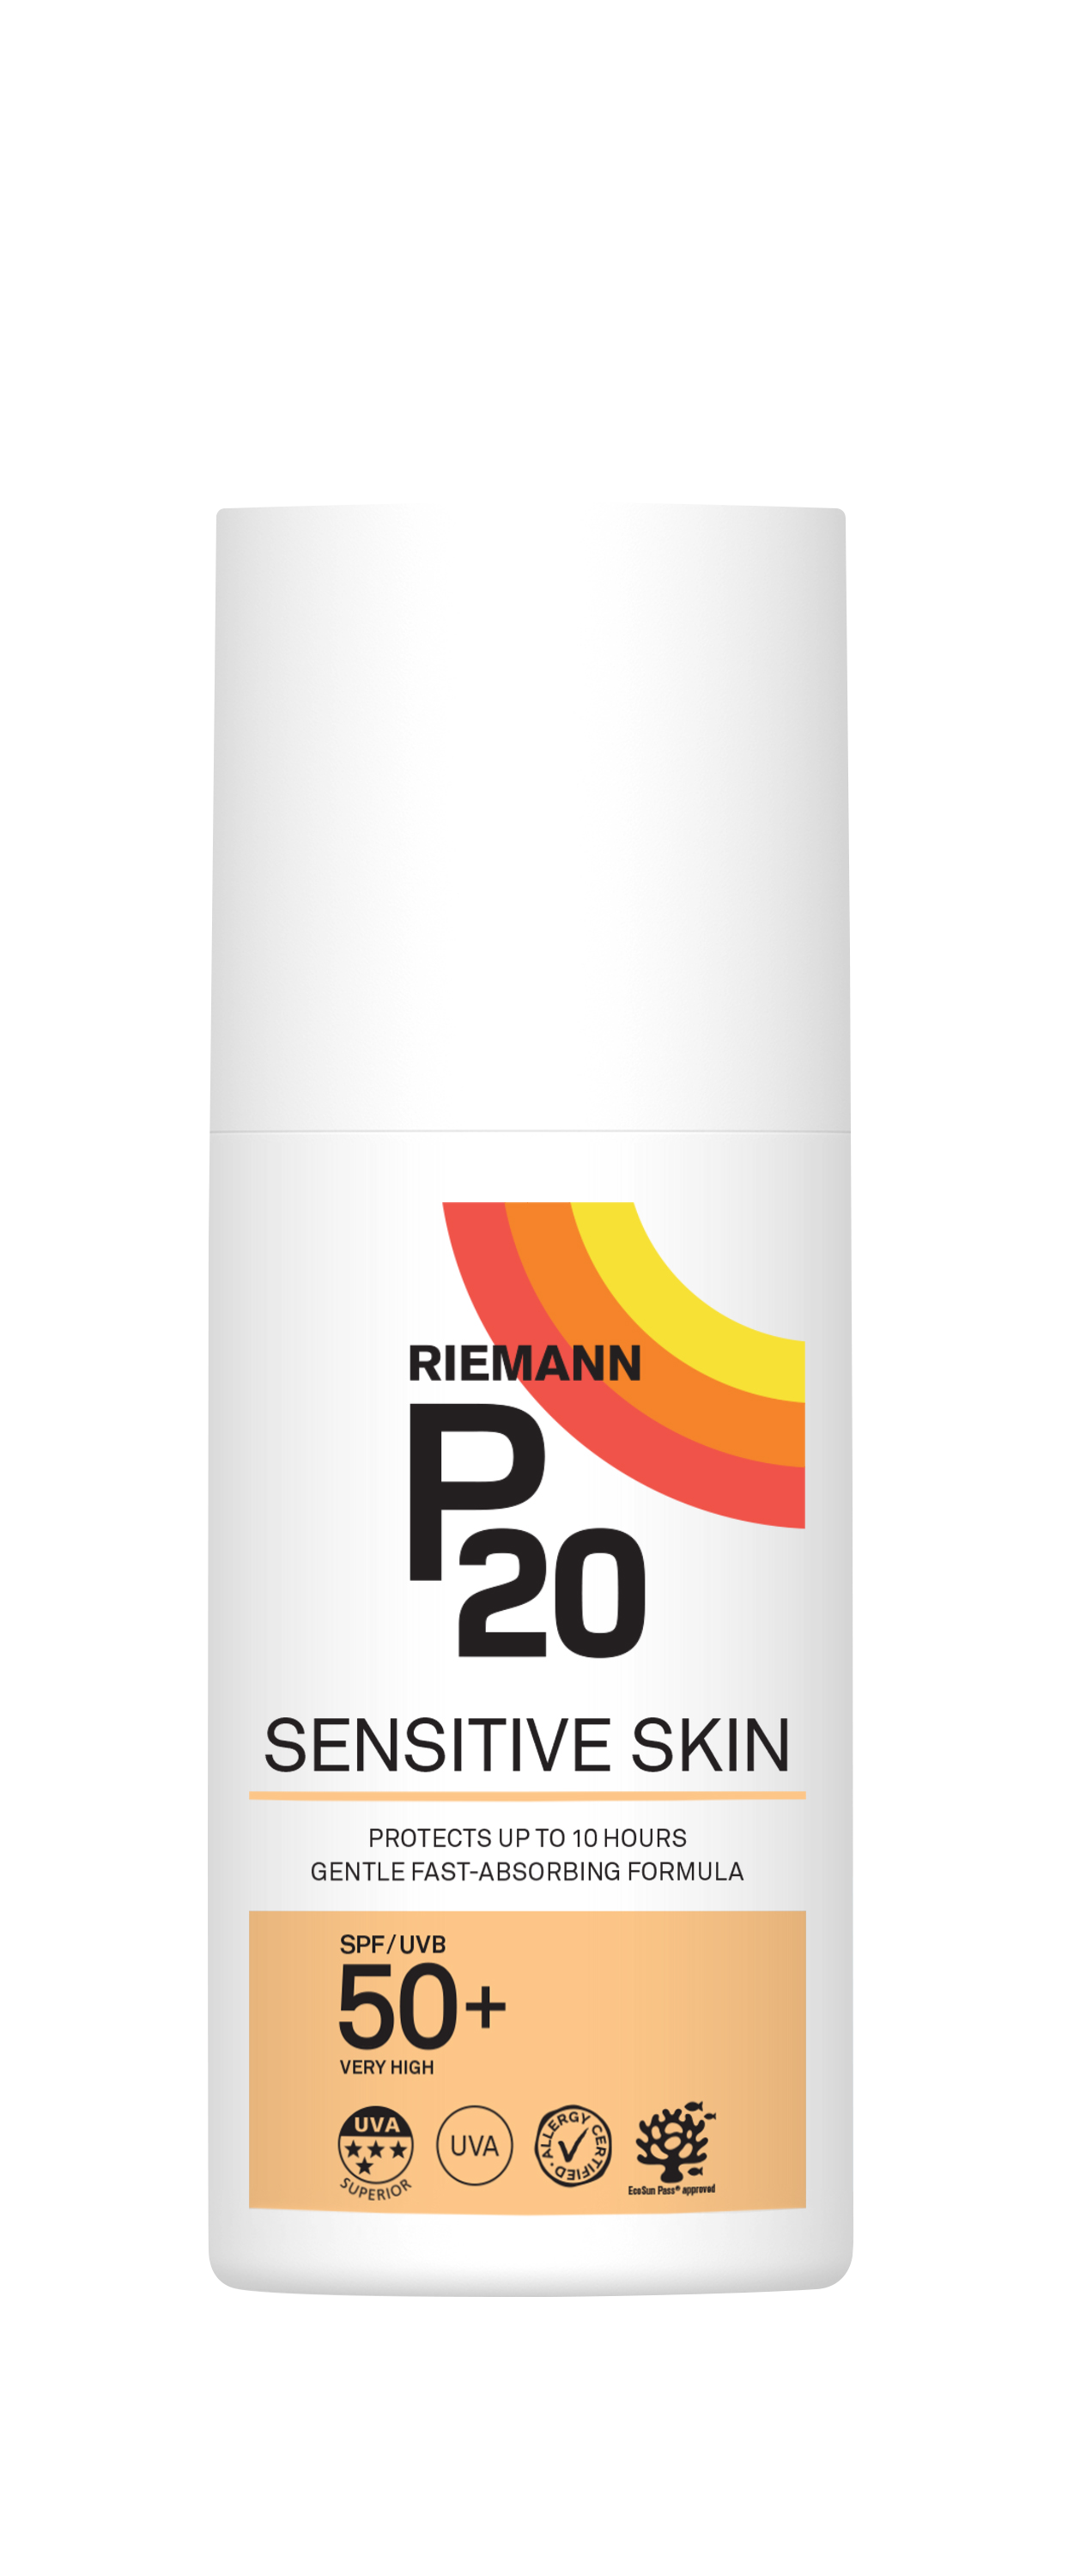 kommentar Institut Disciplin P20 Riemann Sensitive Skin SPF 50+ C (200 ml) | 251897-14